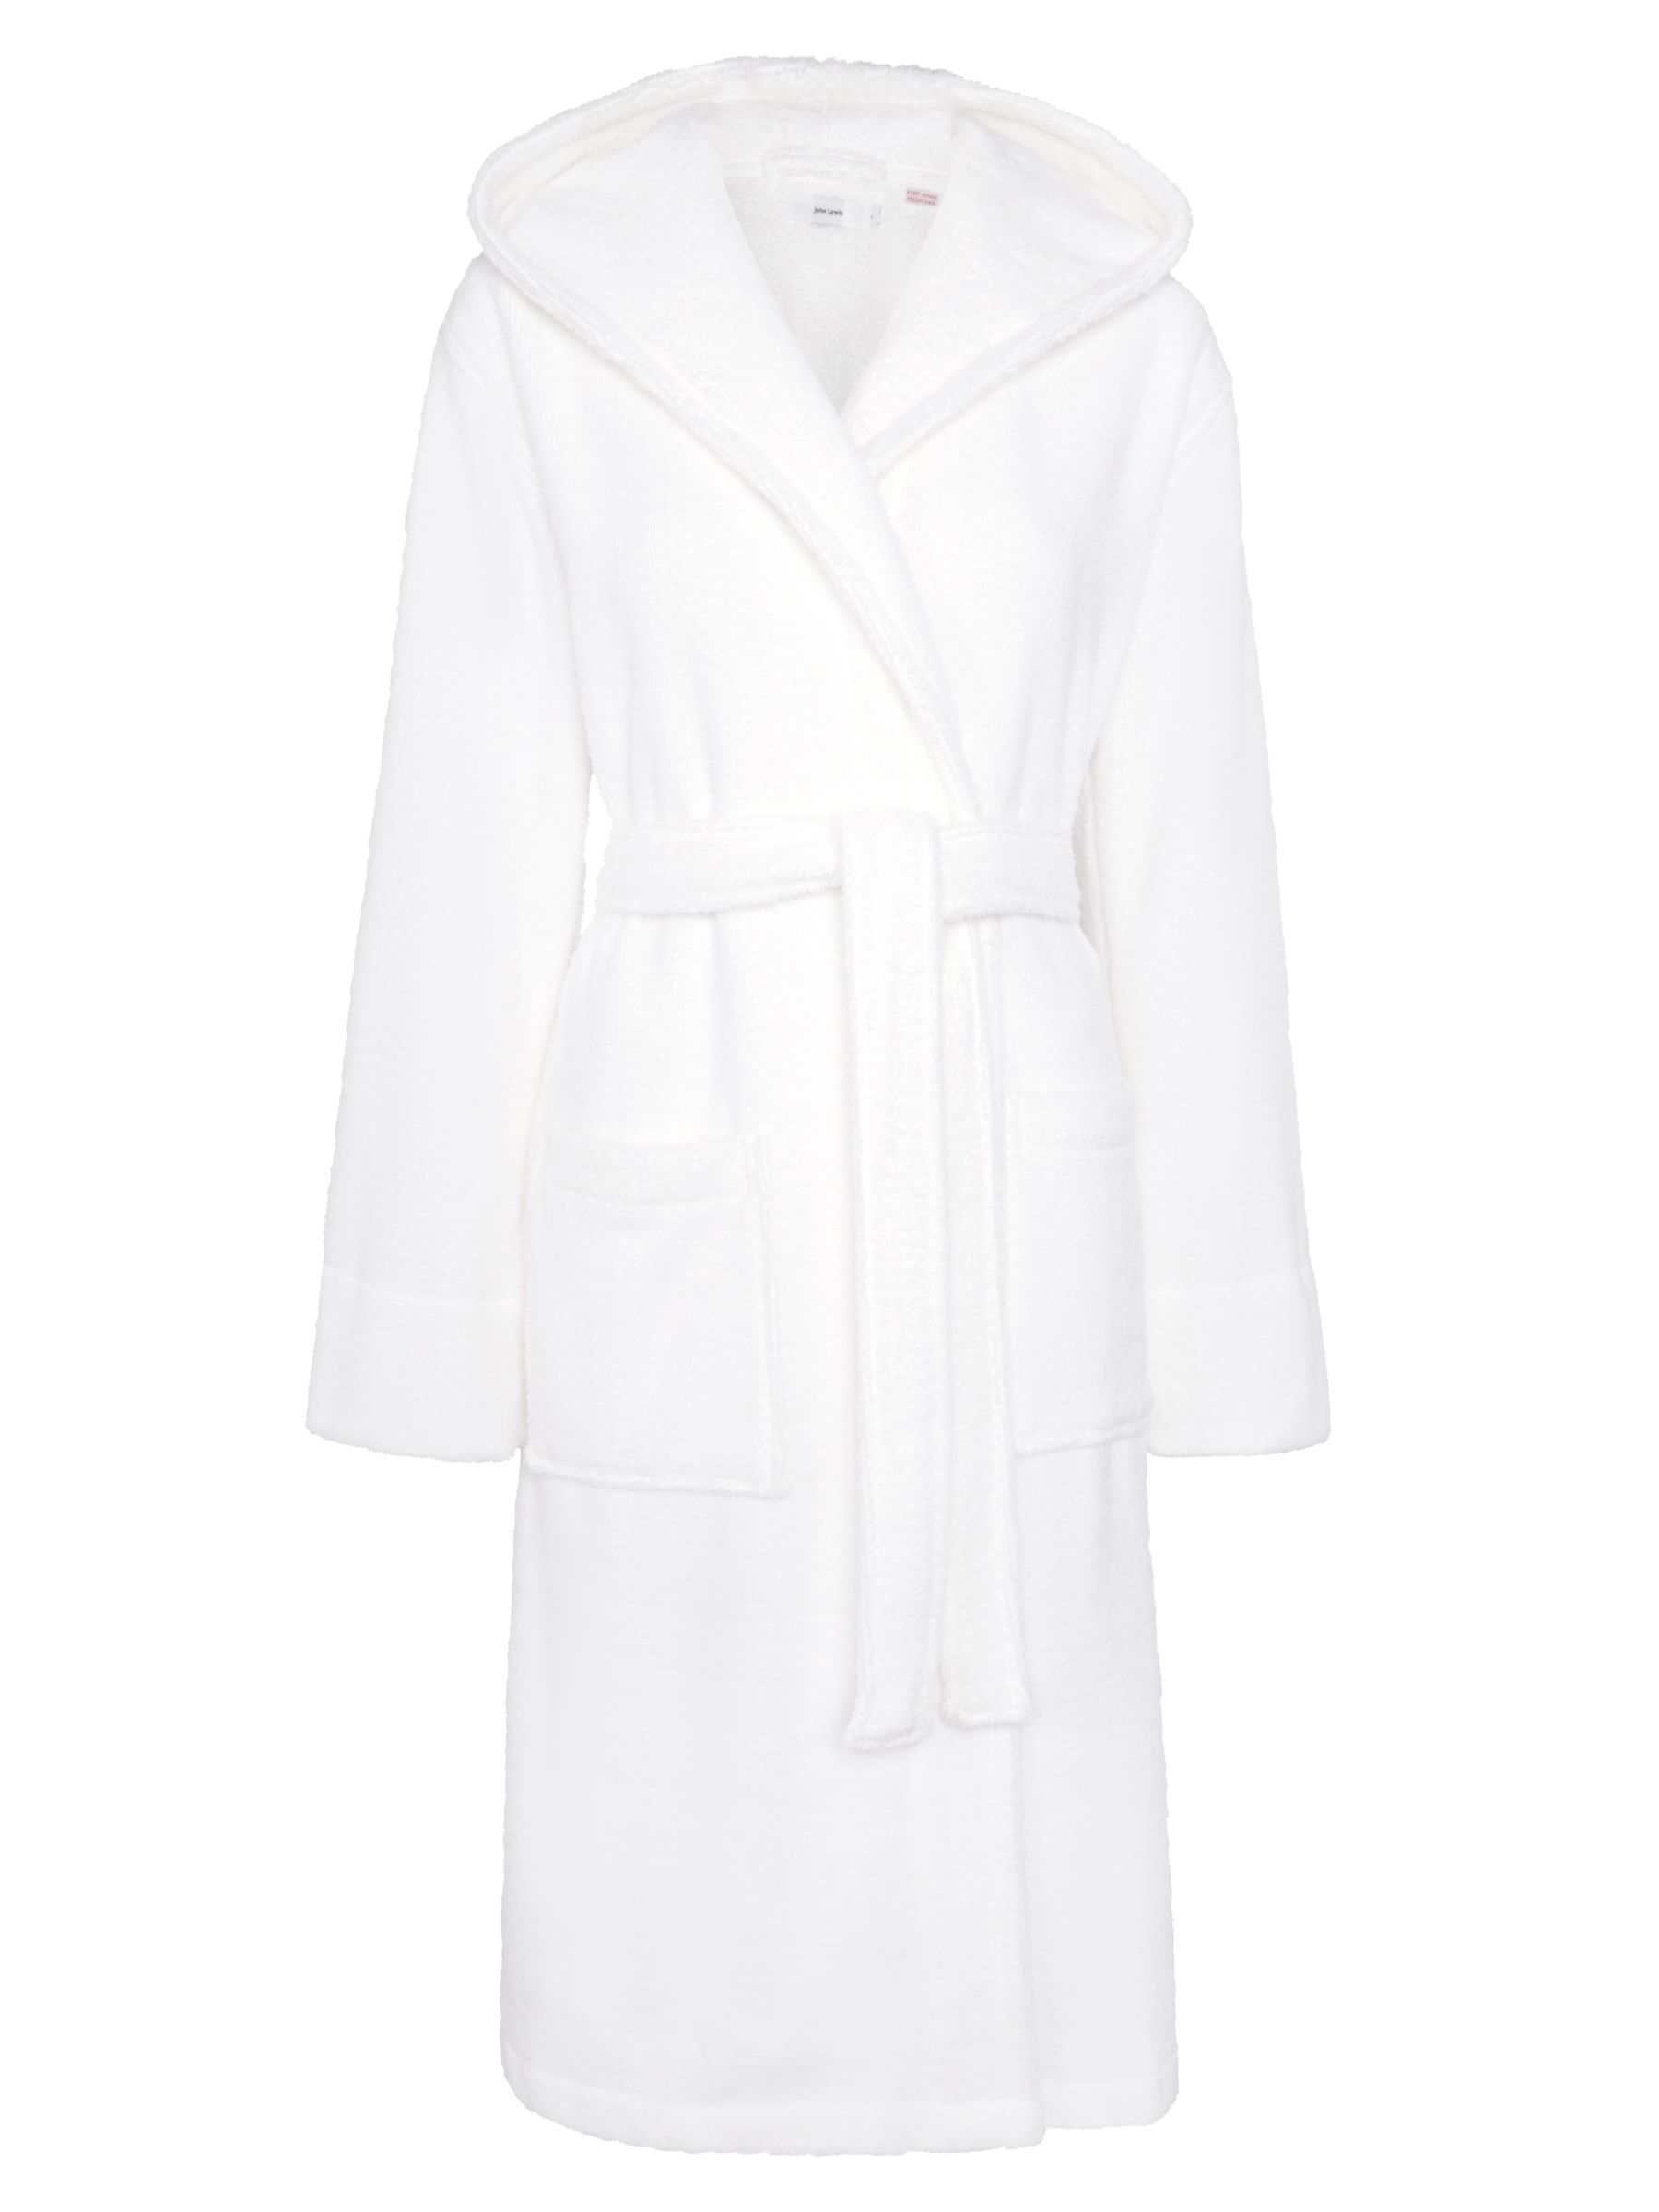 John Lewis Hooded Luxury Towelling Robe, White at John Lewis & Partners